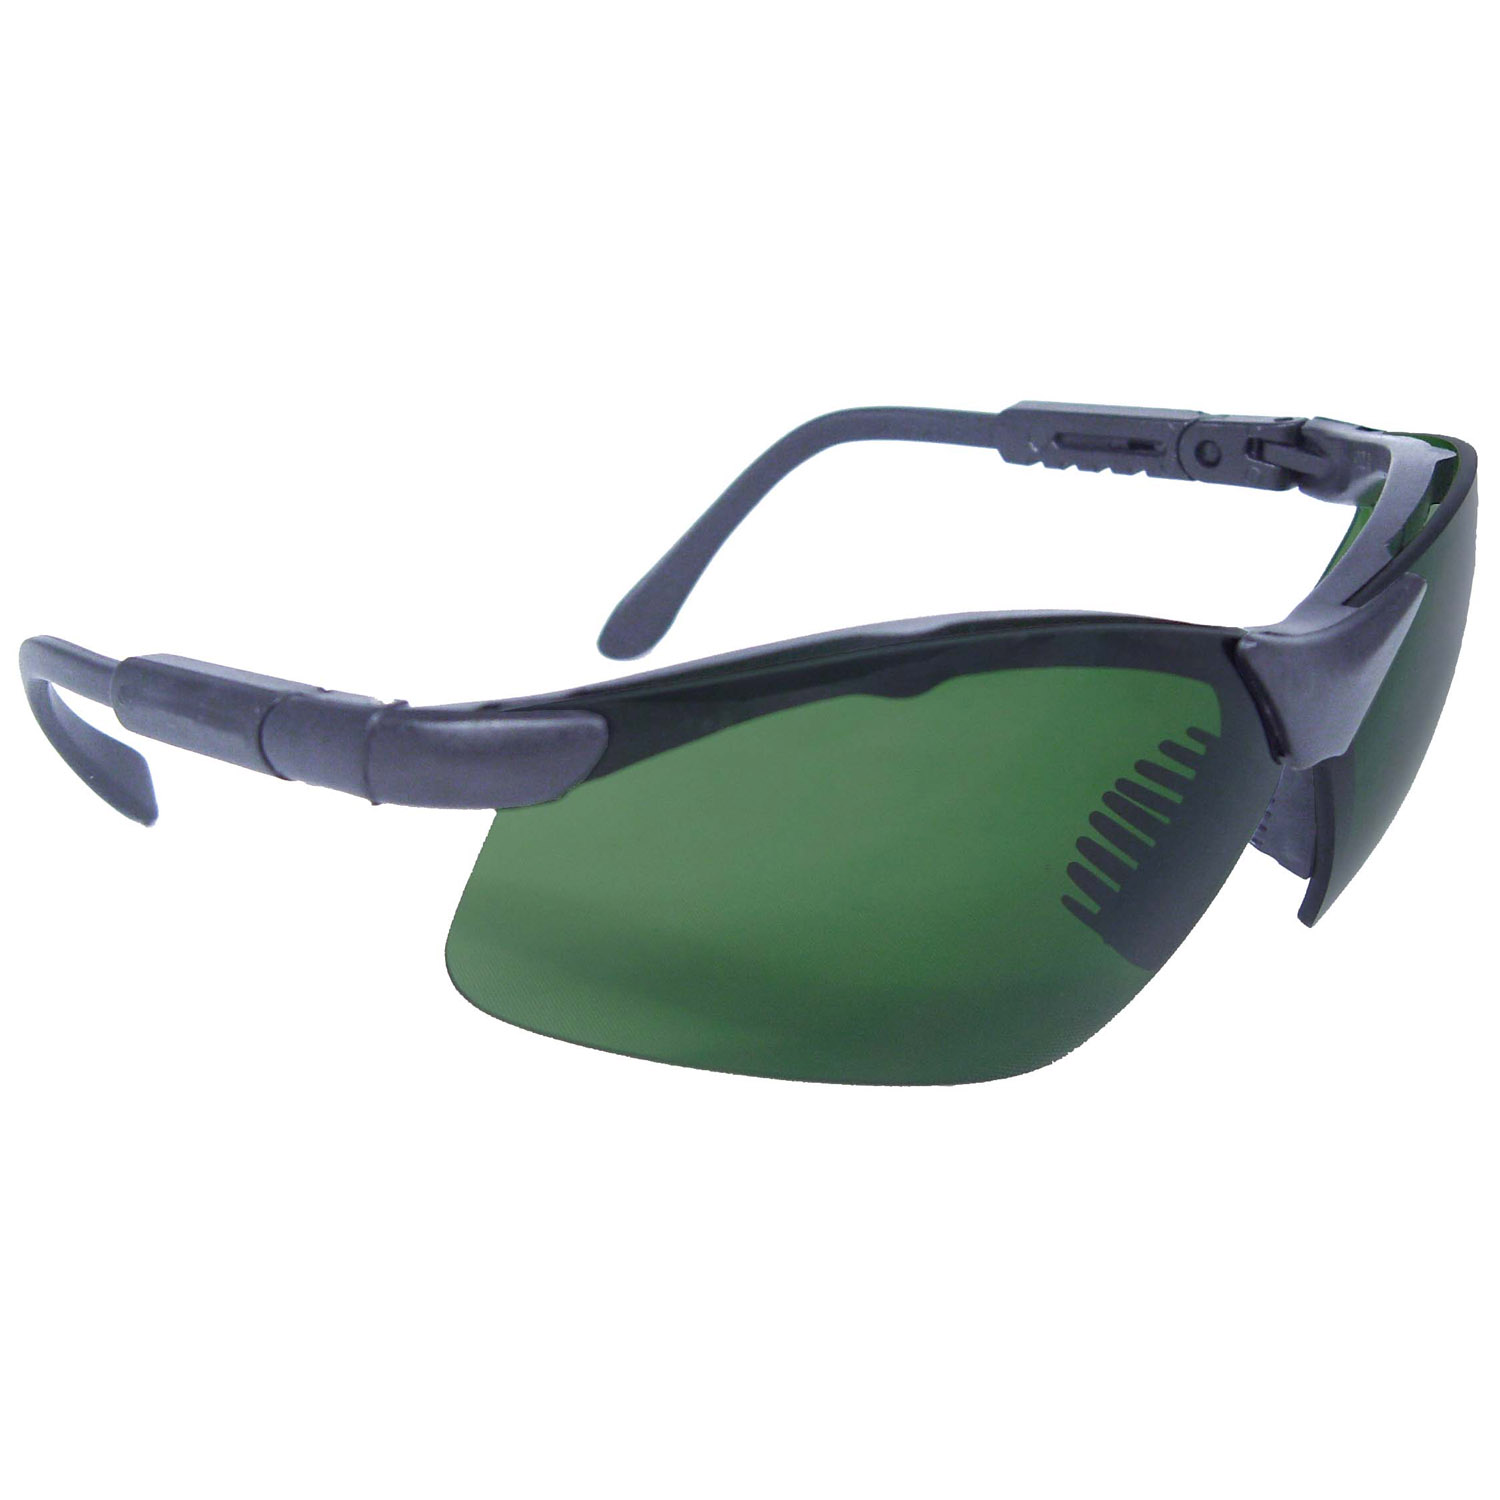 Radians Rv0150id Revelation Safety Glasses Smoke Frame Green Iruv 5 0 Lens Full Source